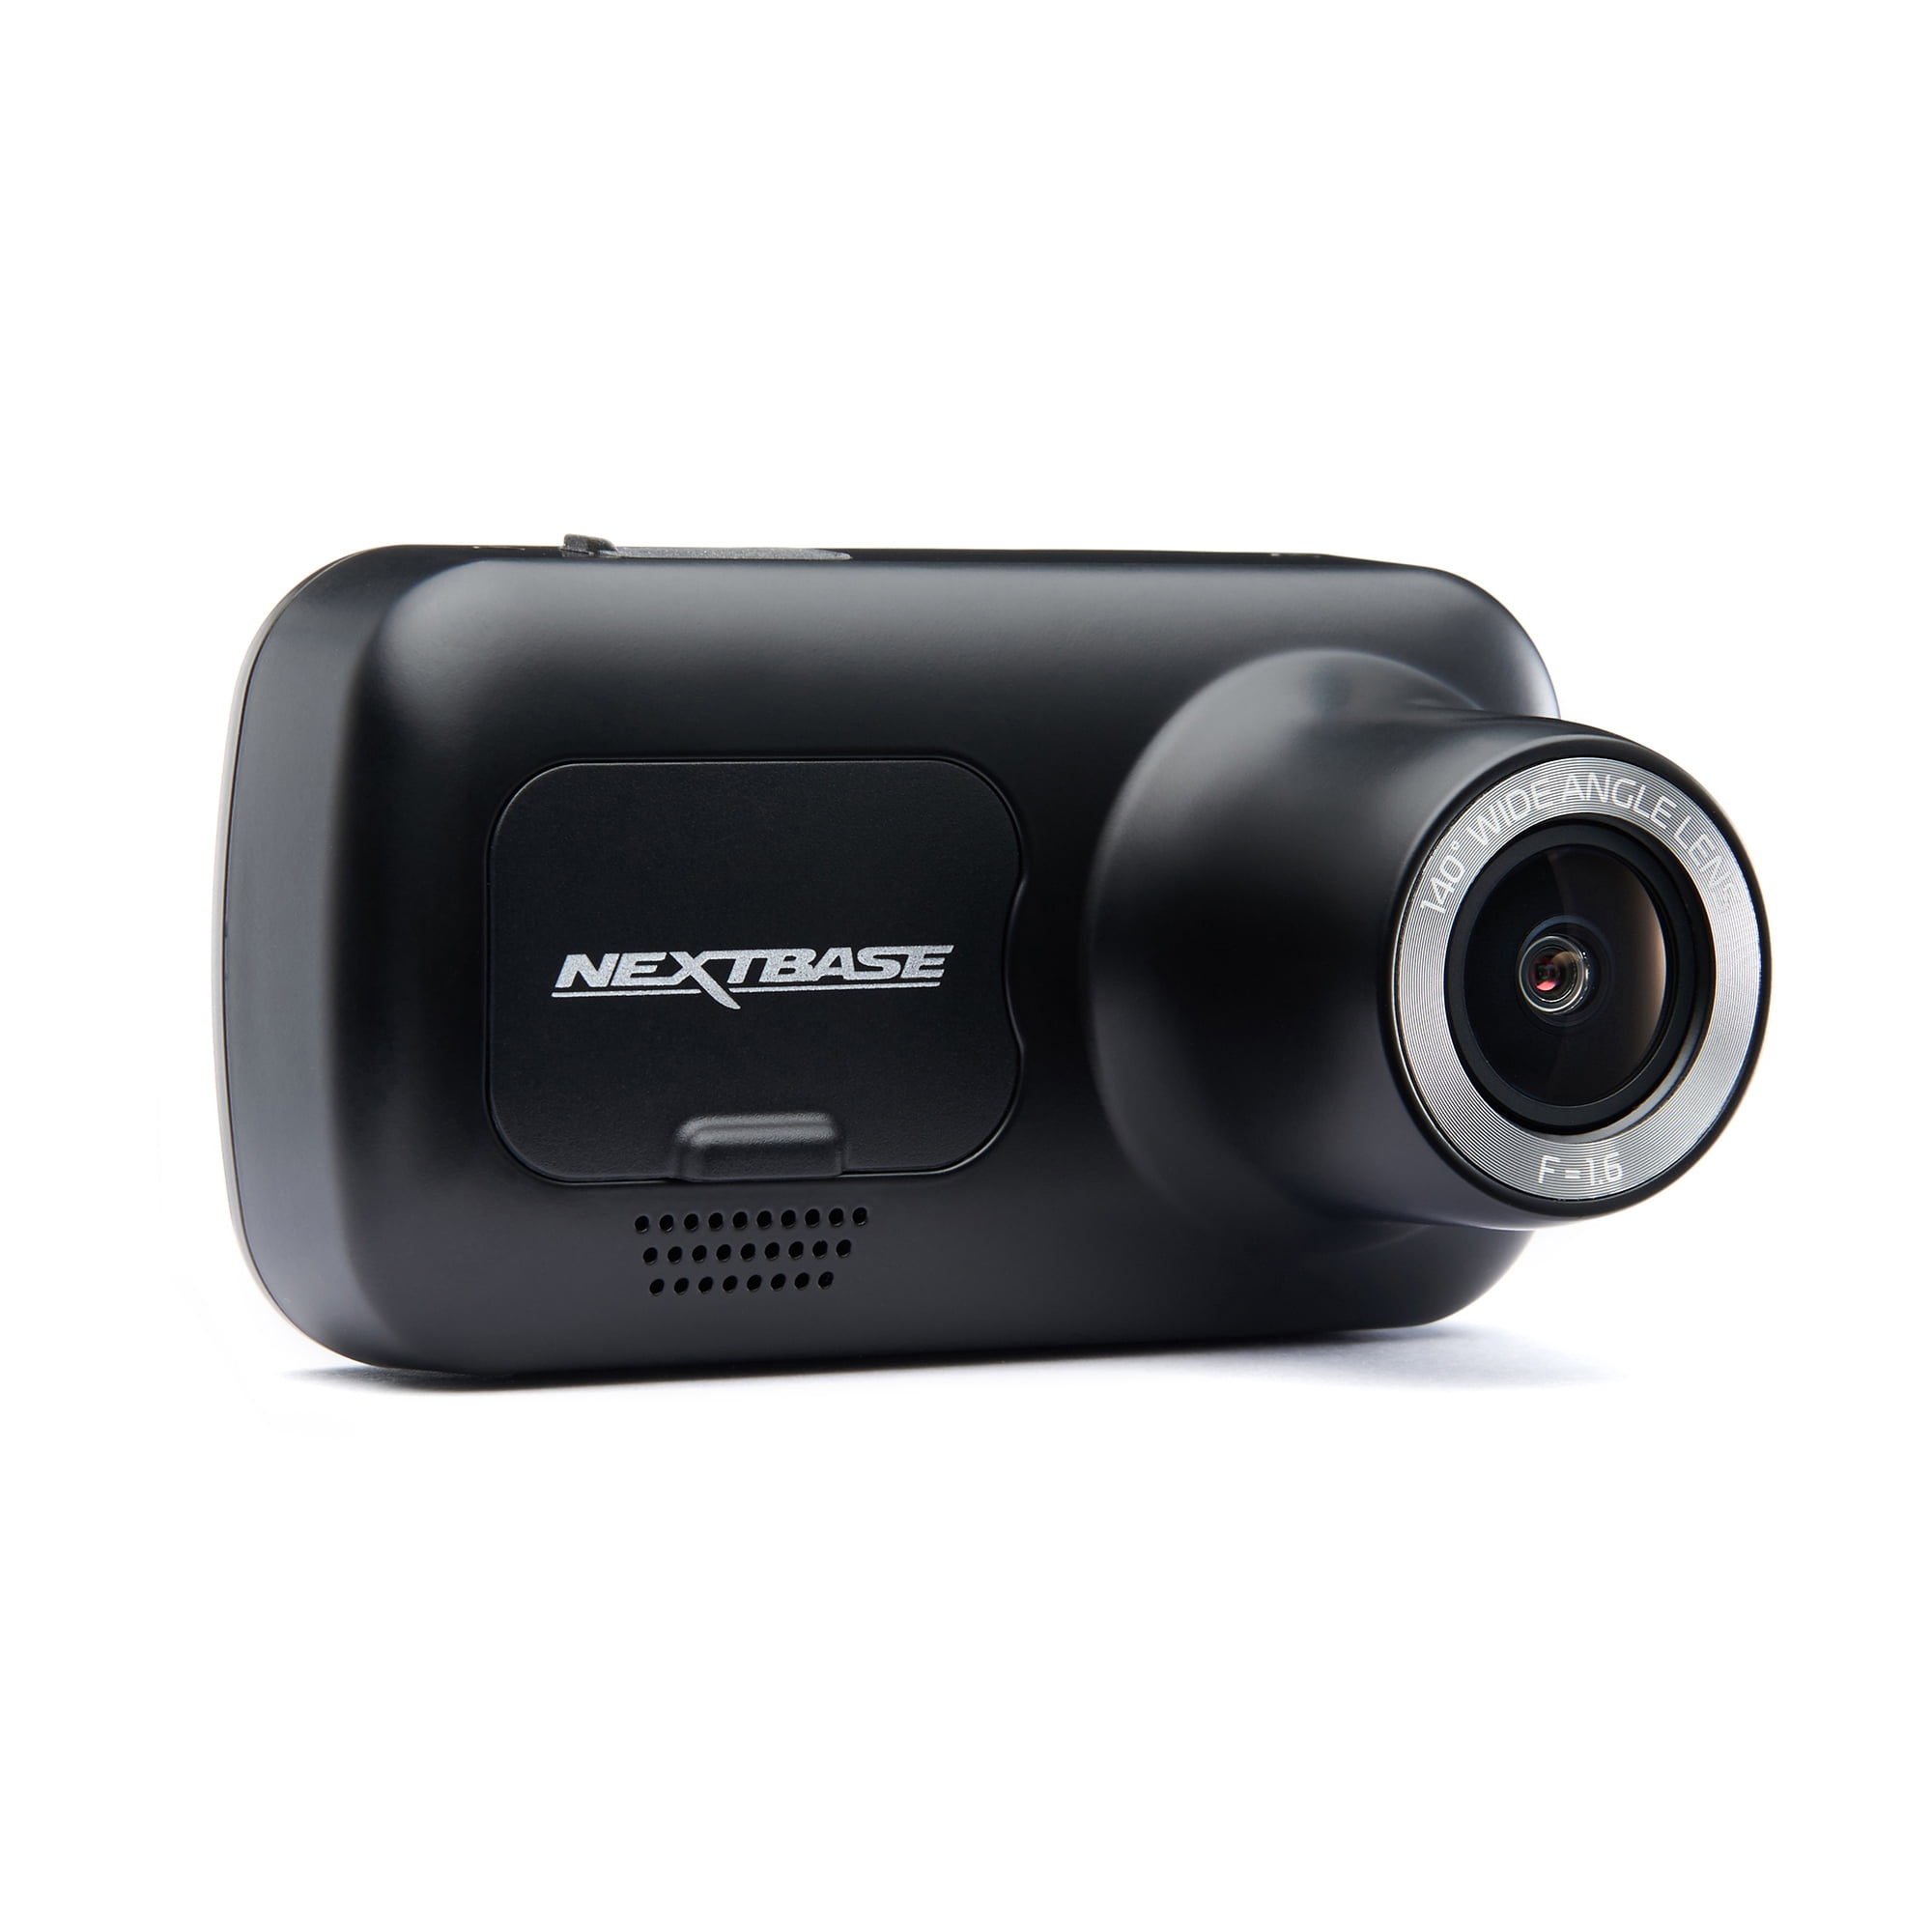 Nextbase 222 Compact Dash Cam in Black 2.5 HD IPS Screen, 1080p